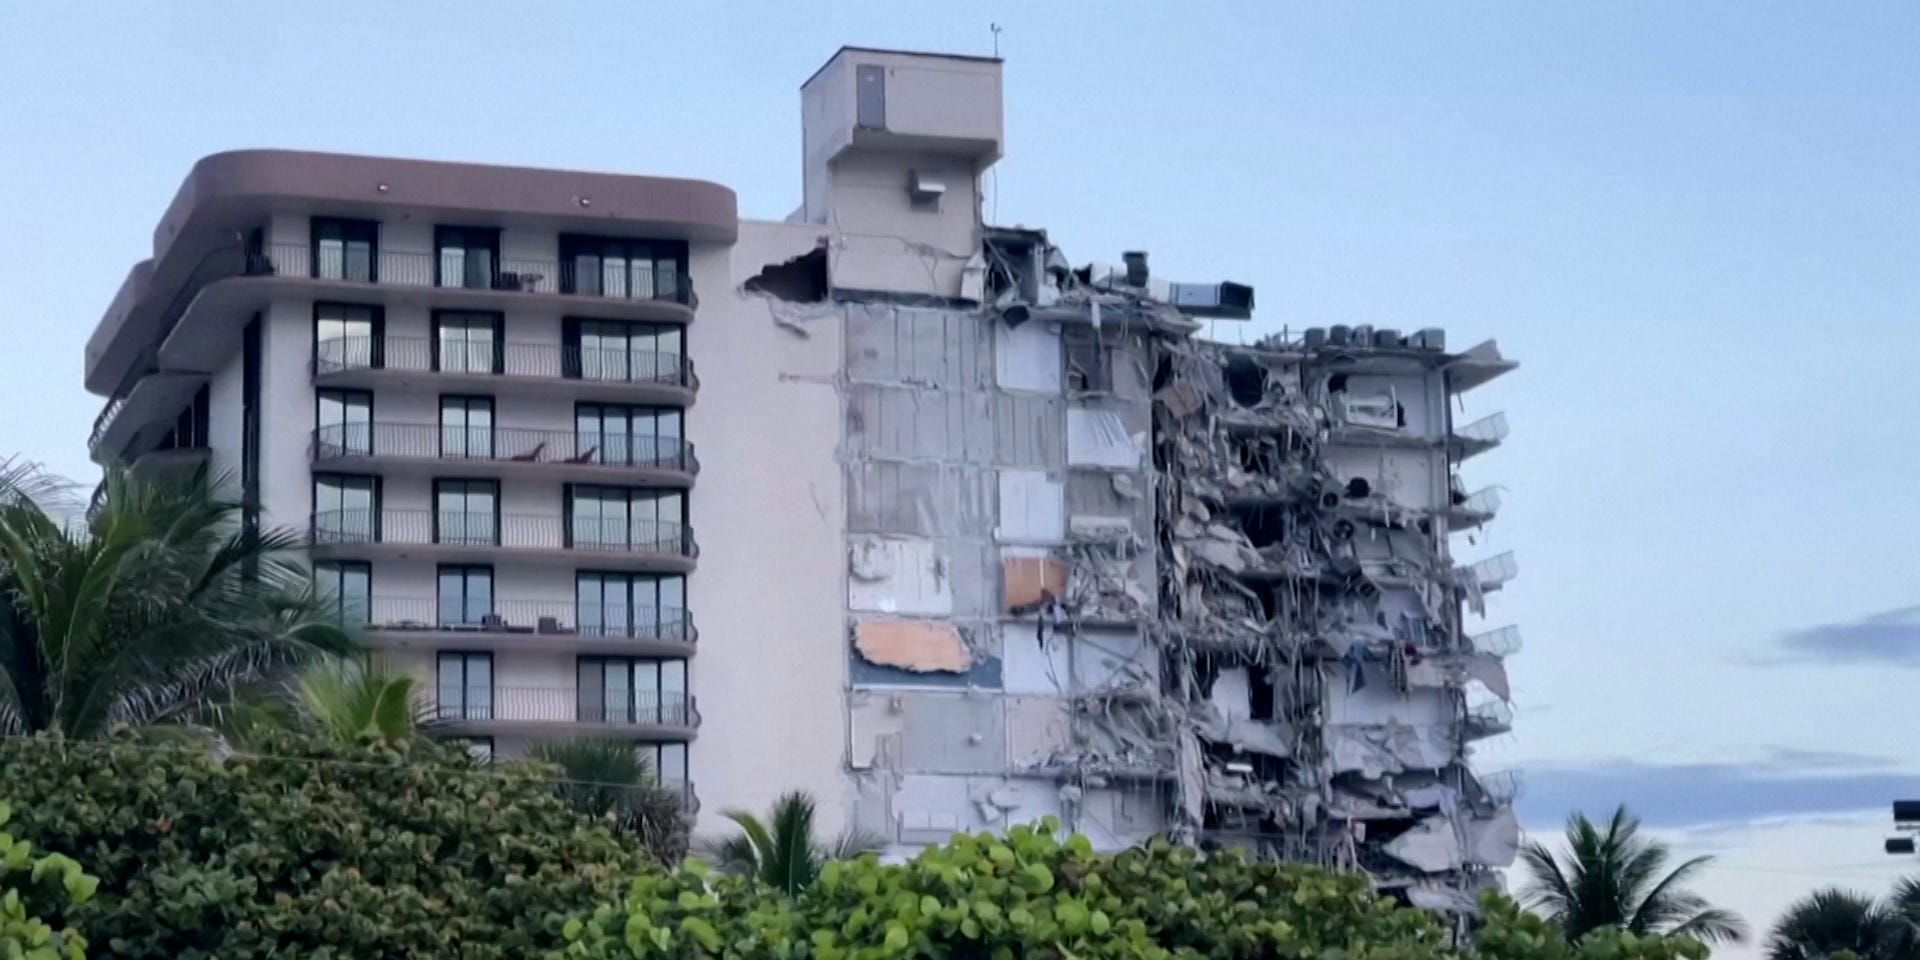 Miami Building collapse